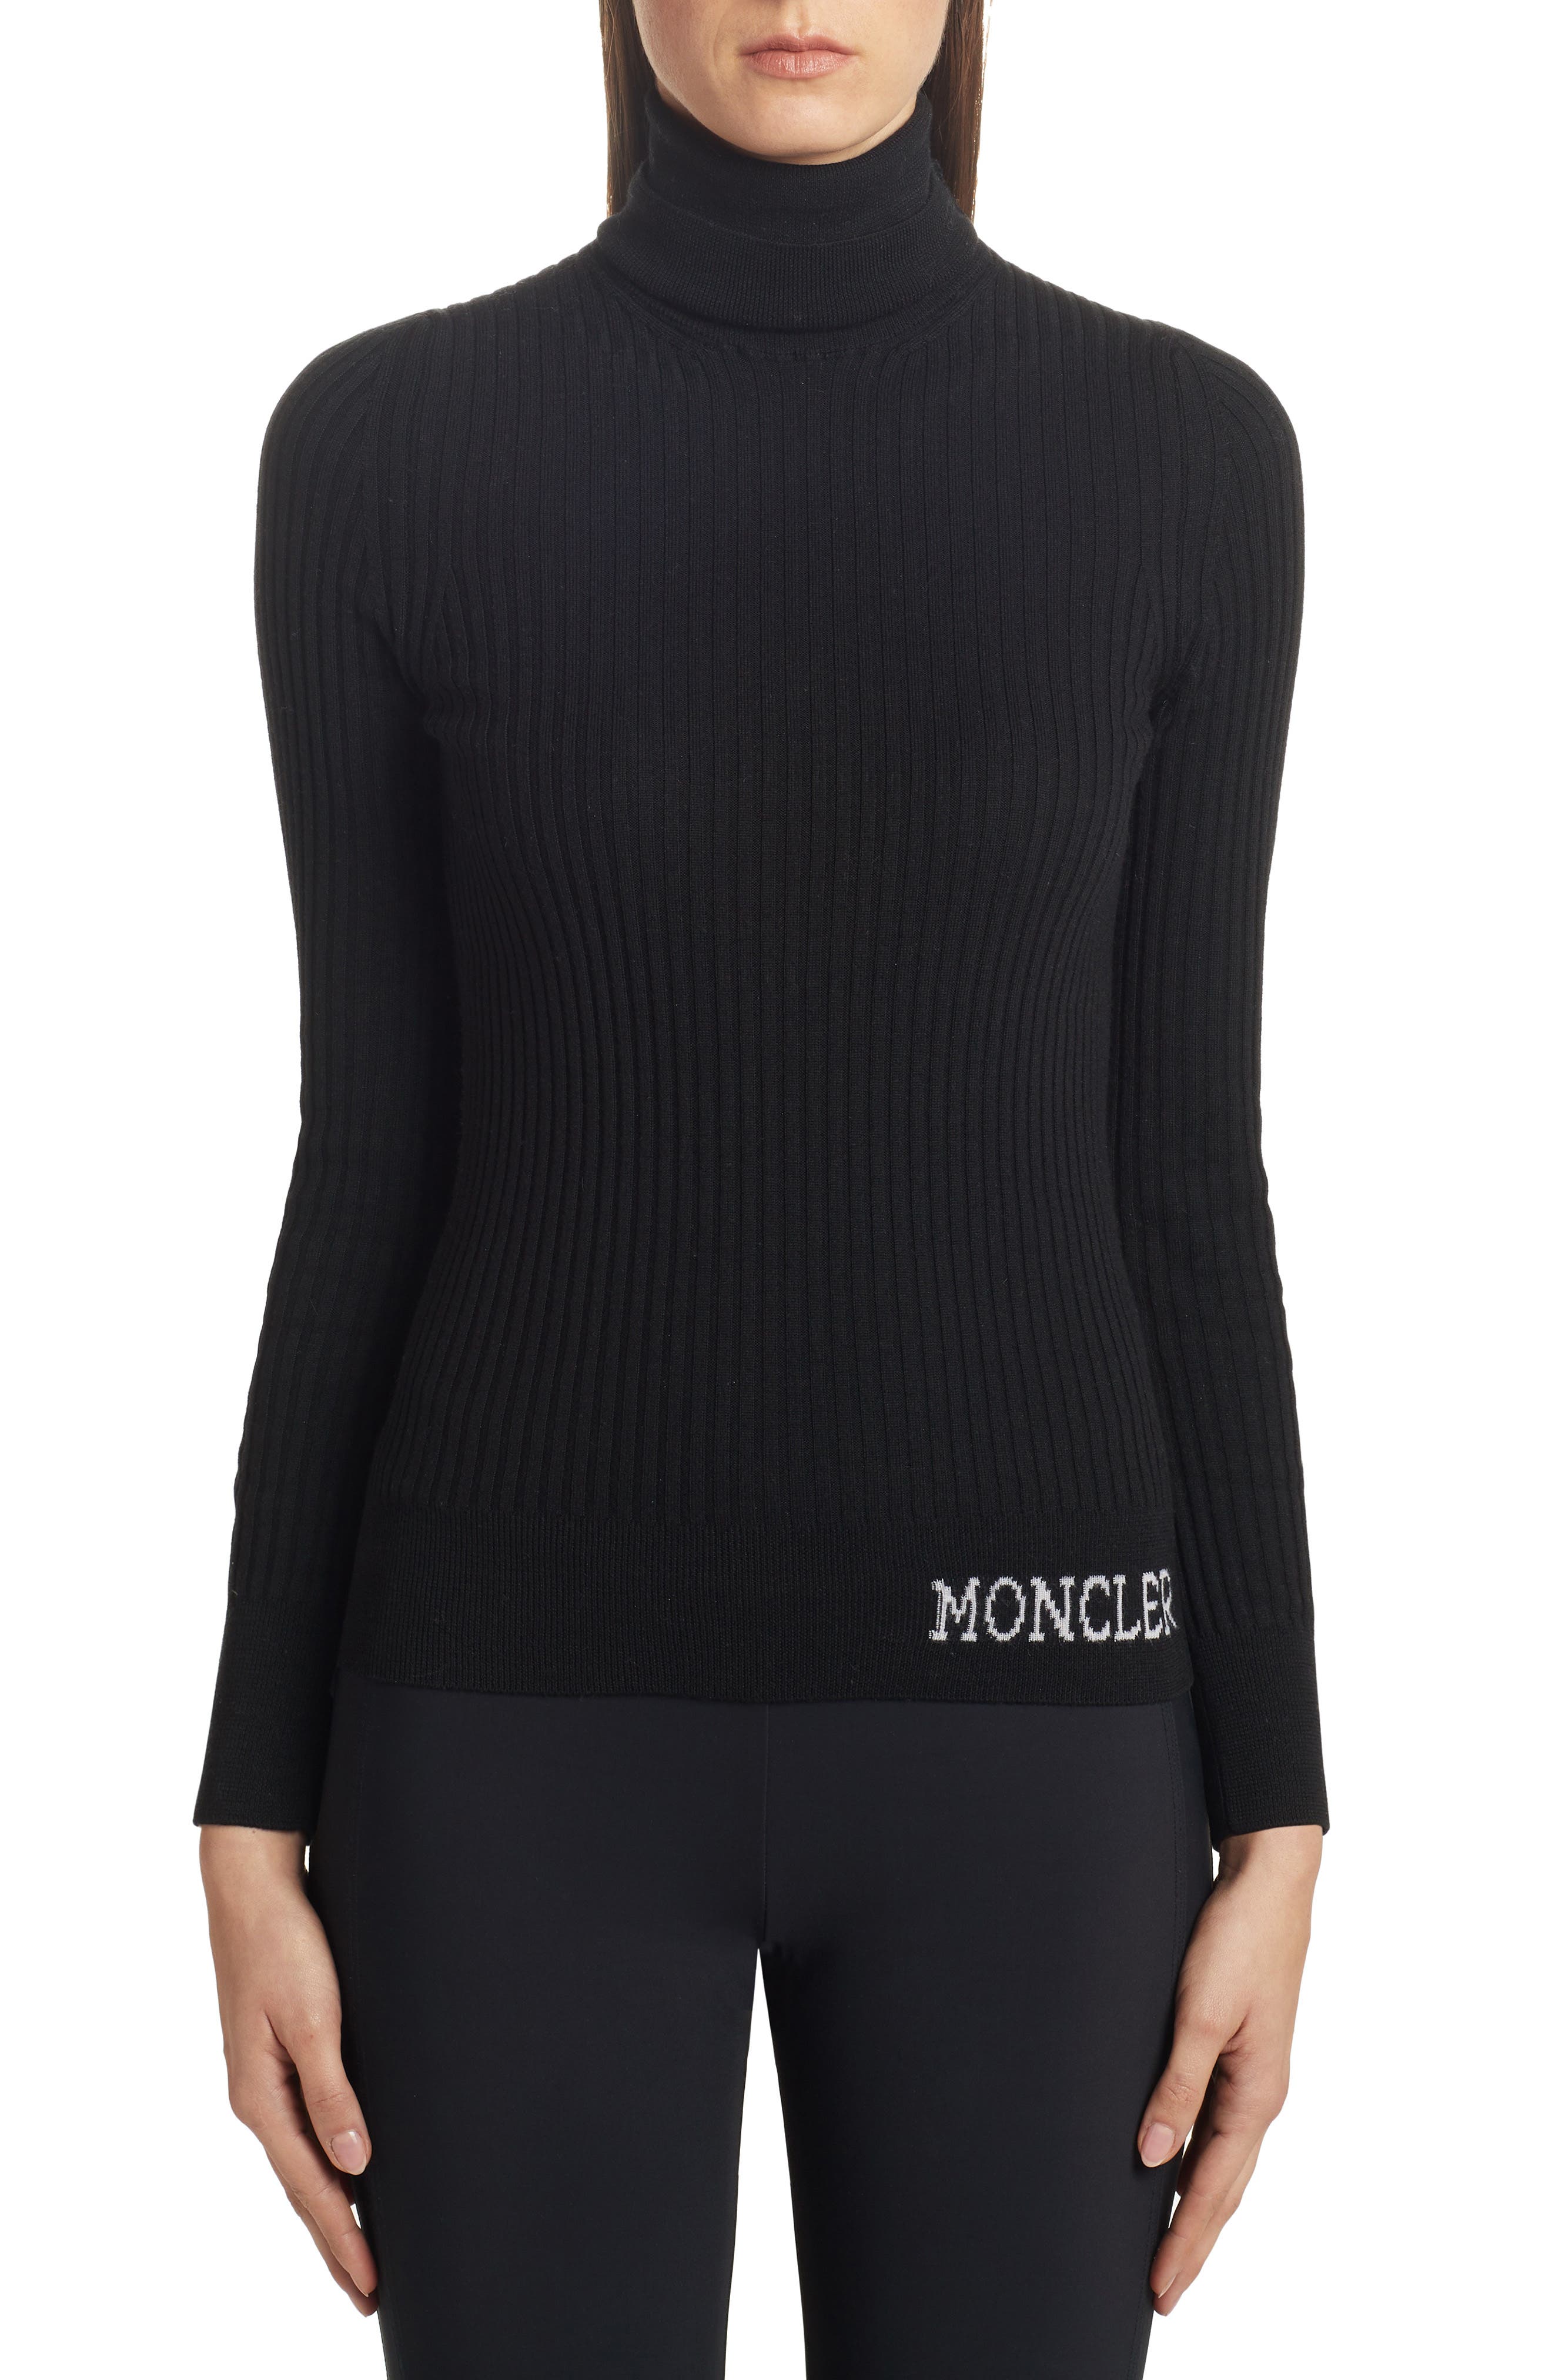 moncler women's sweater